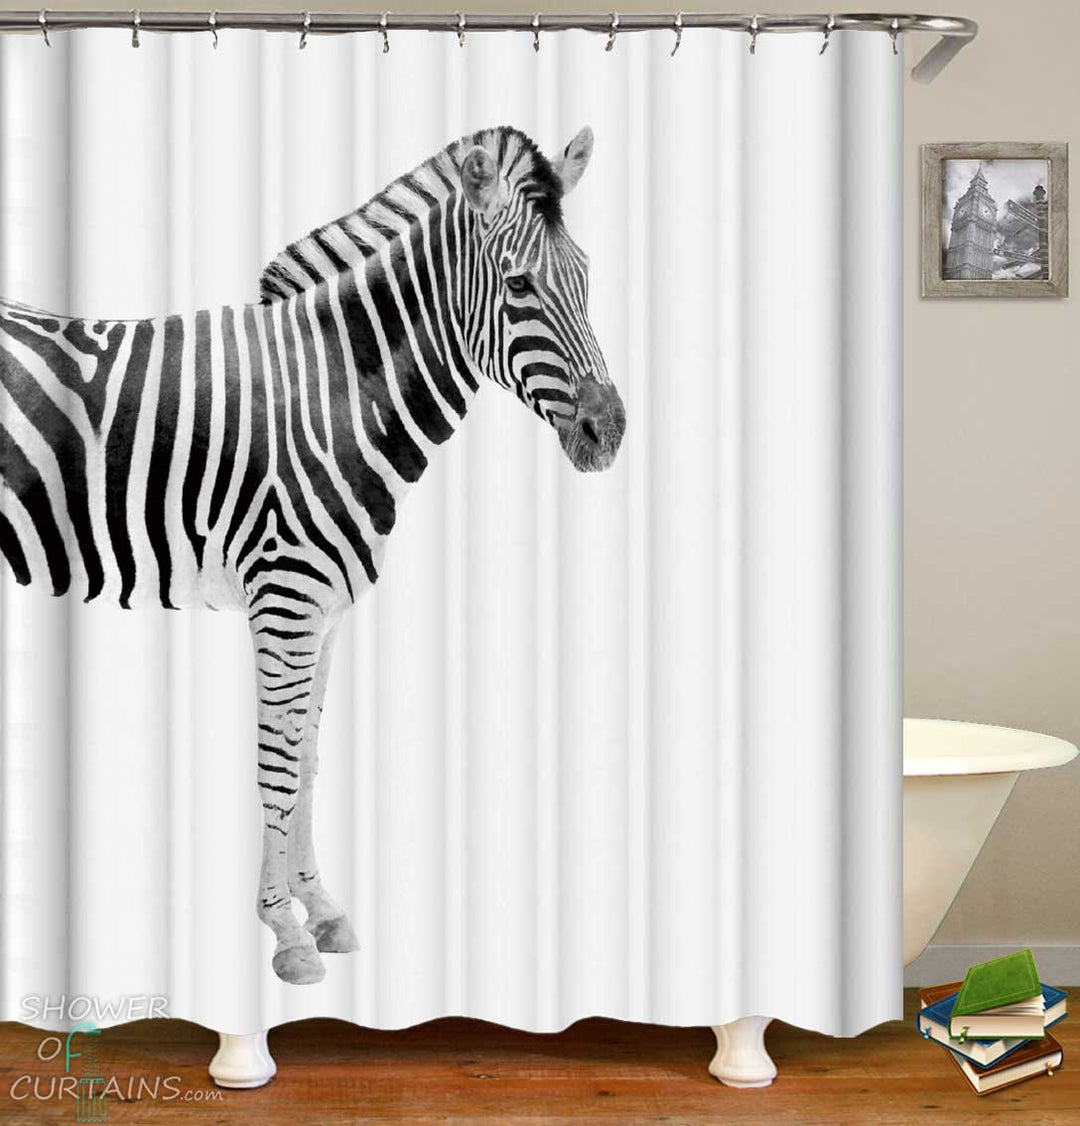 Shower Curtains with Elegant Zebra Profile